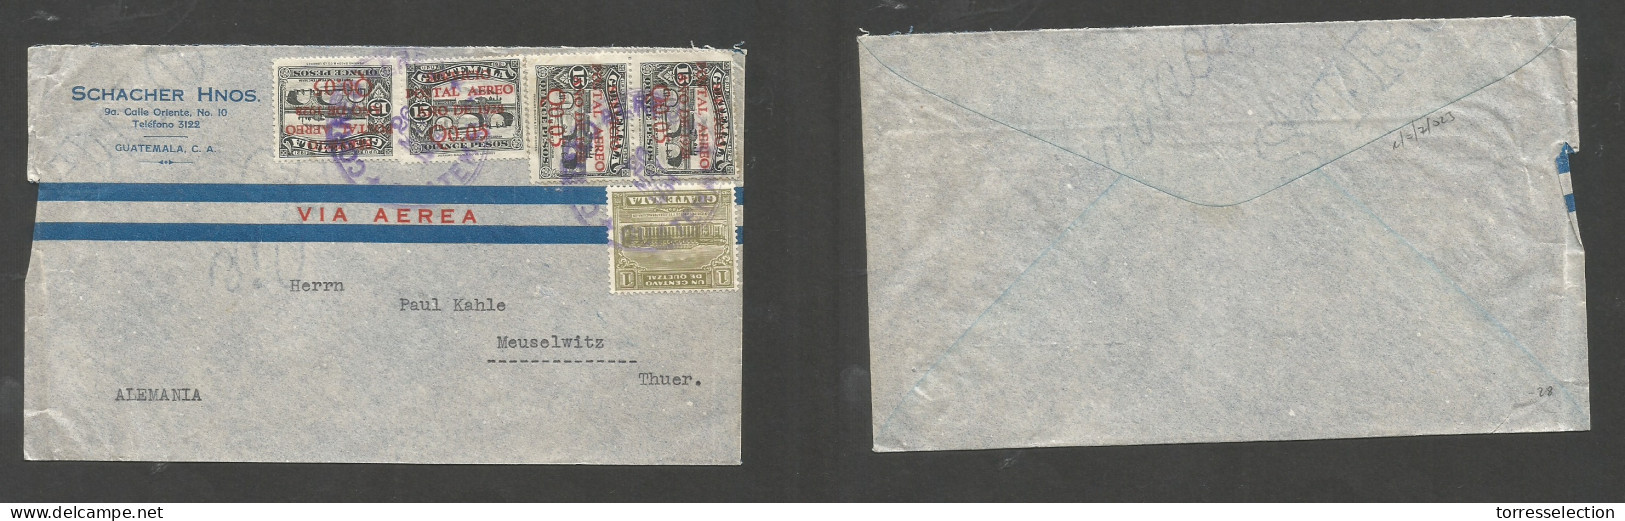 GUATEMALA. 1934 (26 May) GPO - Germany, Menselwitz. Air Ovptd Issue. Multifkd Envelope, Tied Cds. Interesting Usage. SAL - Guatemala